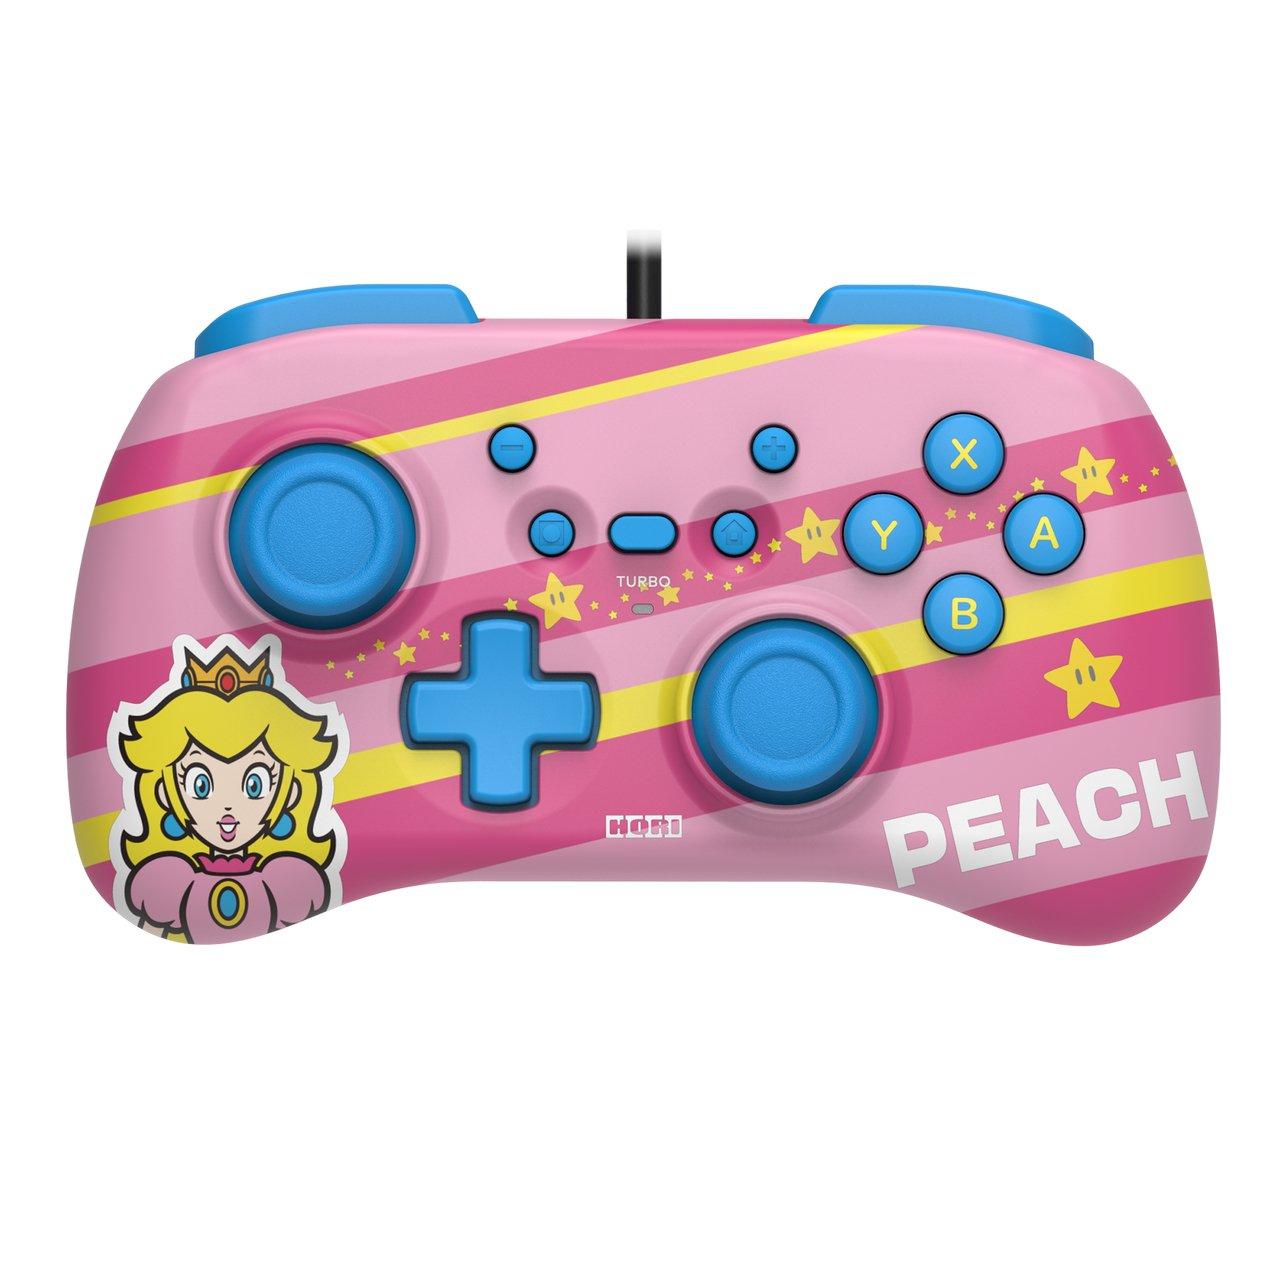 HORI Horipad Mini – Peach gaming controller Bleu Jaune Rose